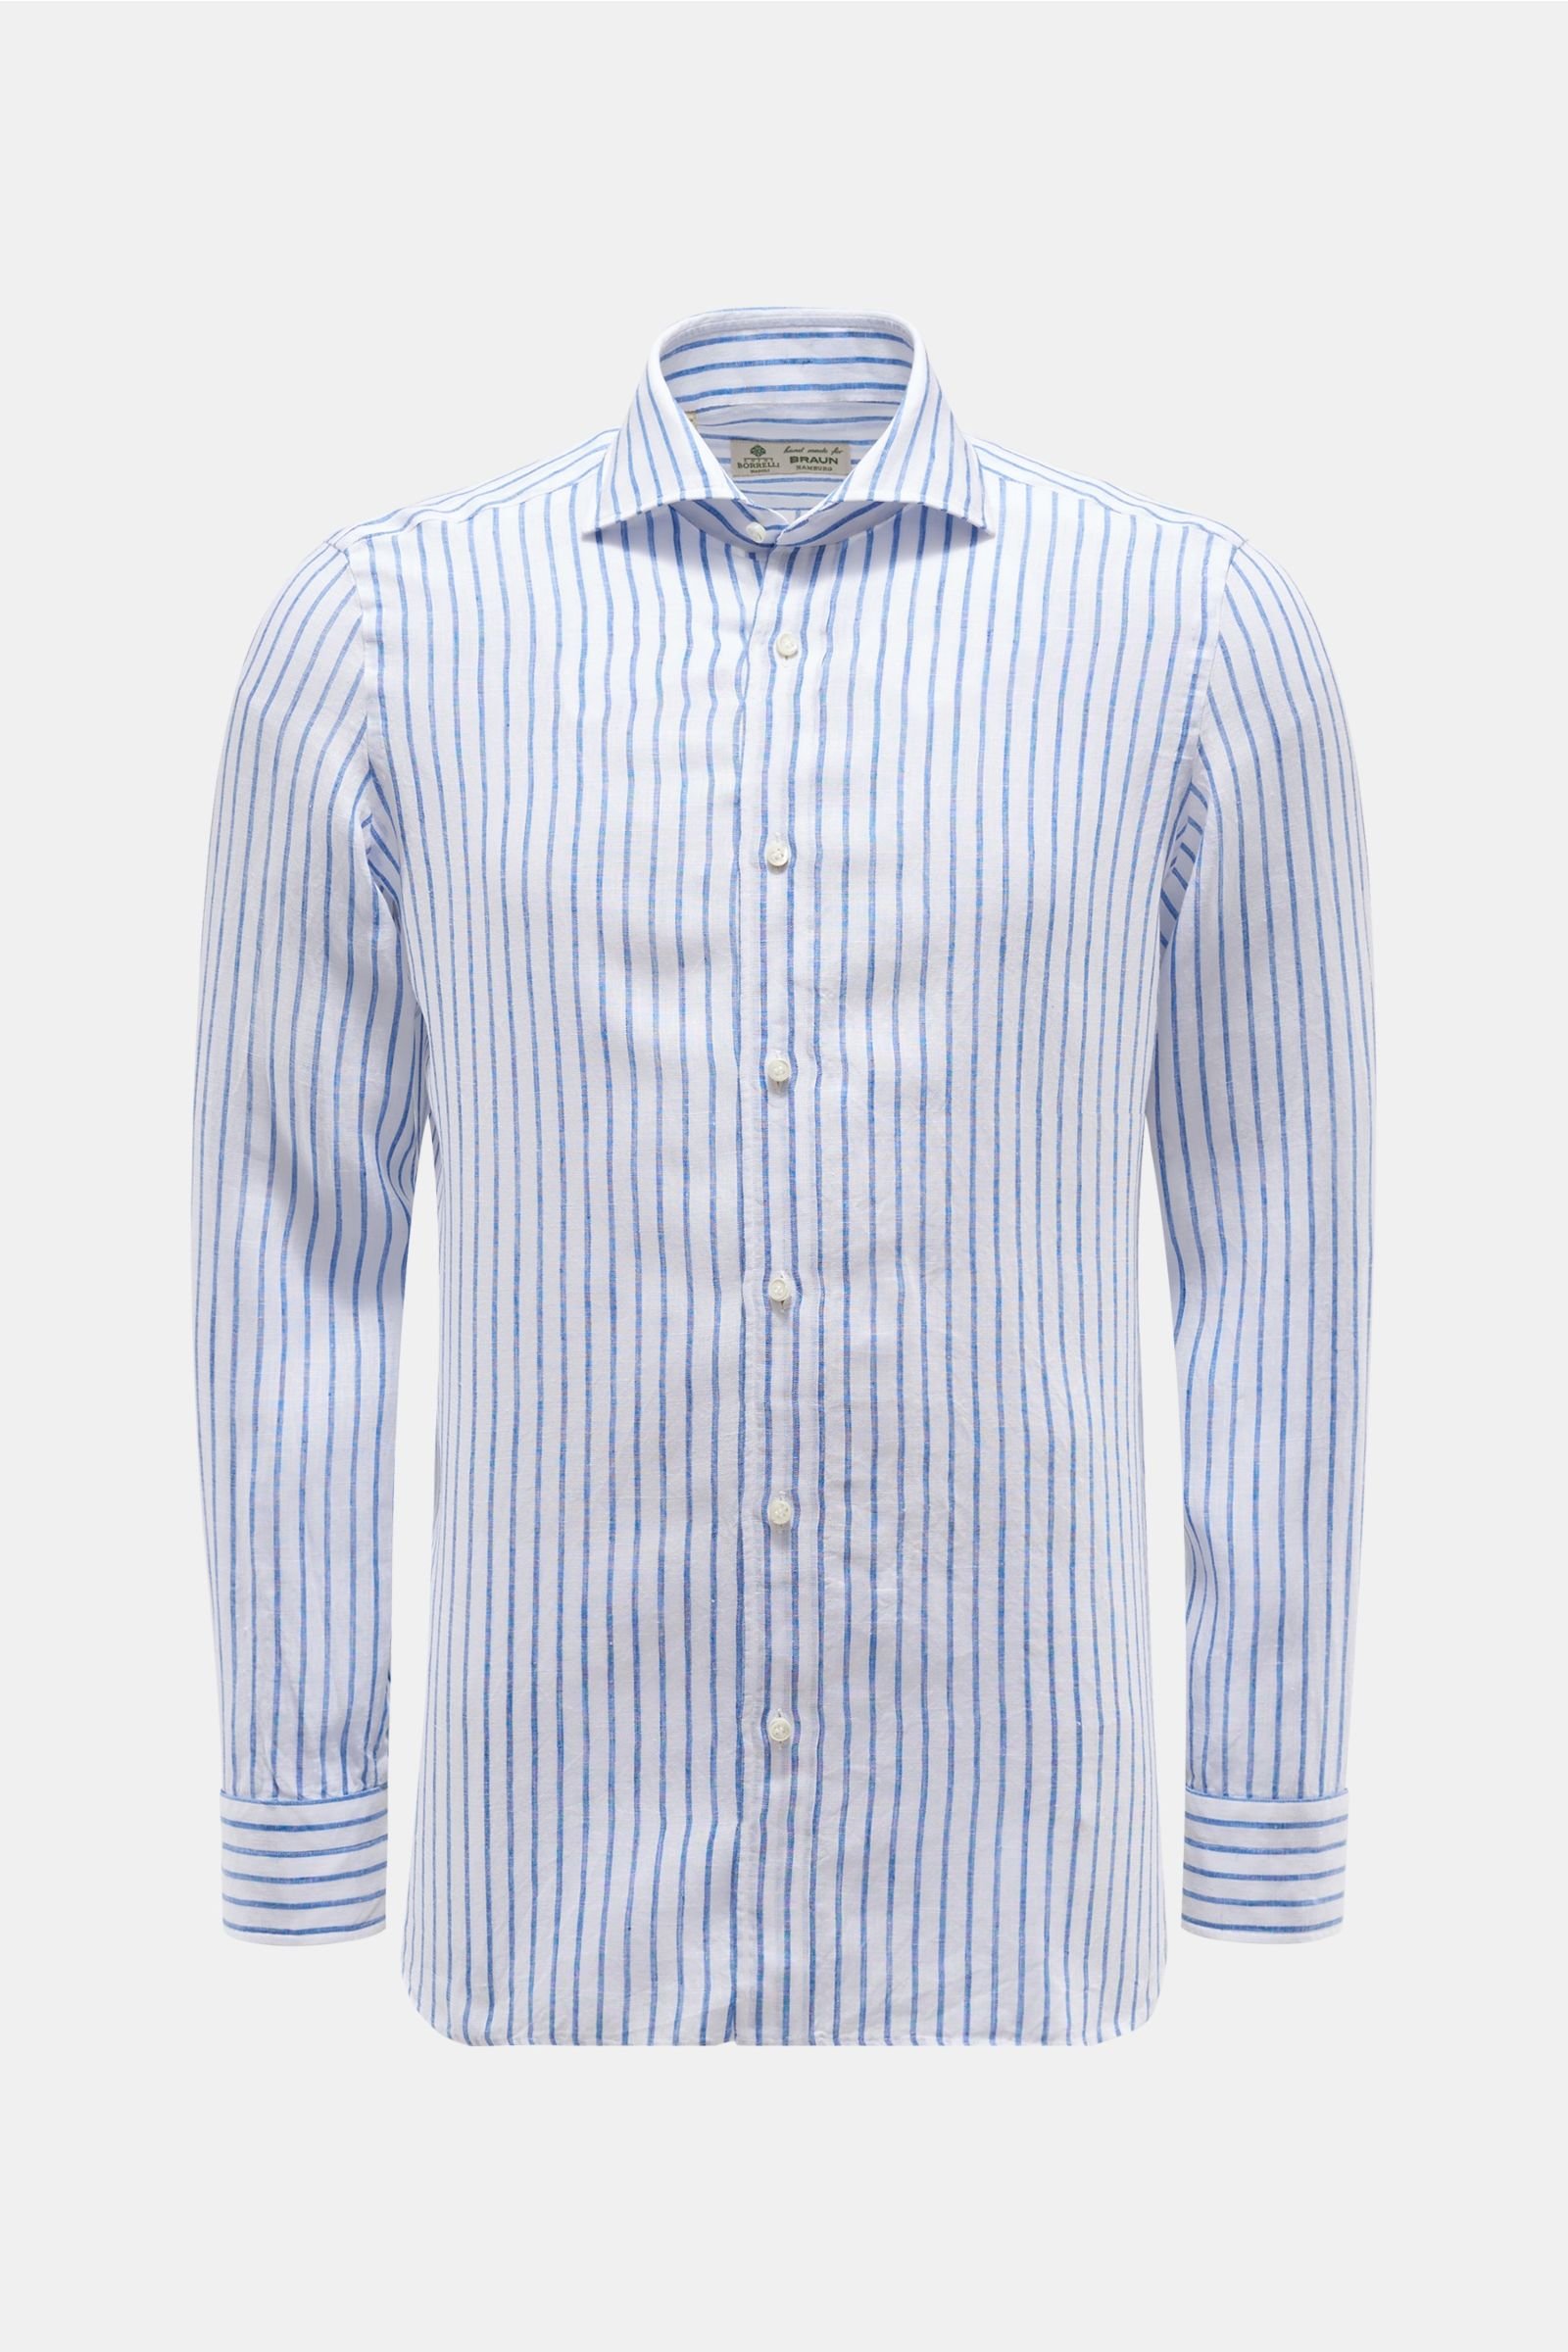 Linen shirt 'Ettore' shark collar blue/white striped